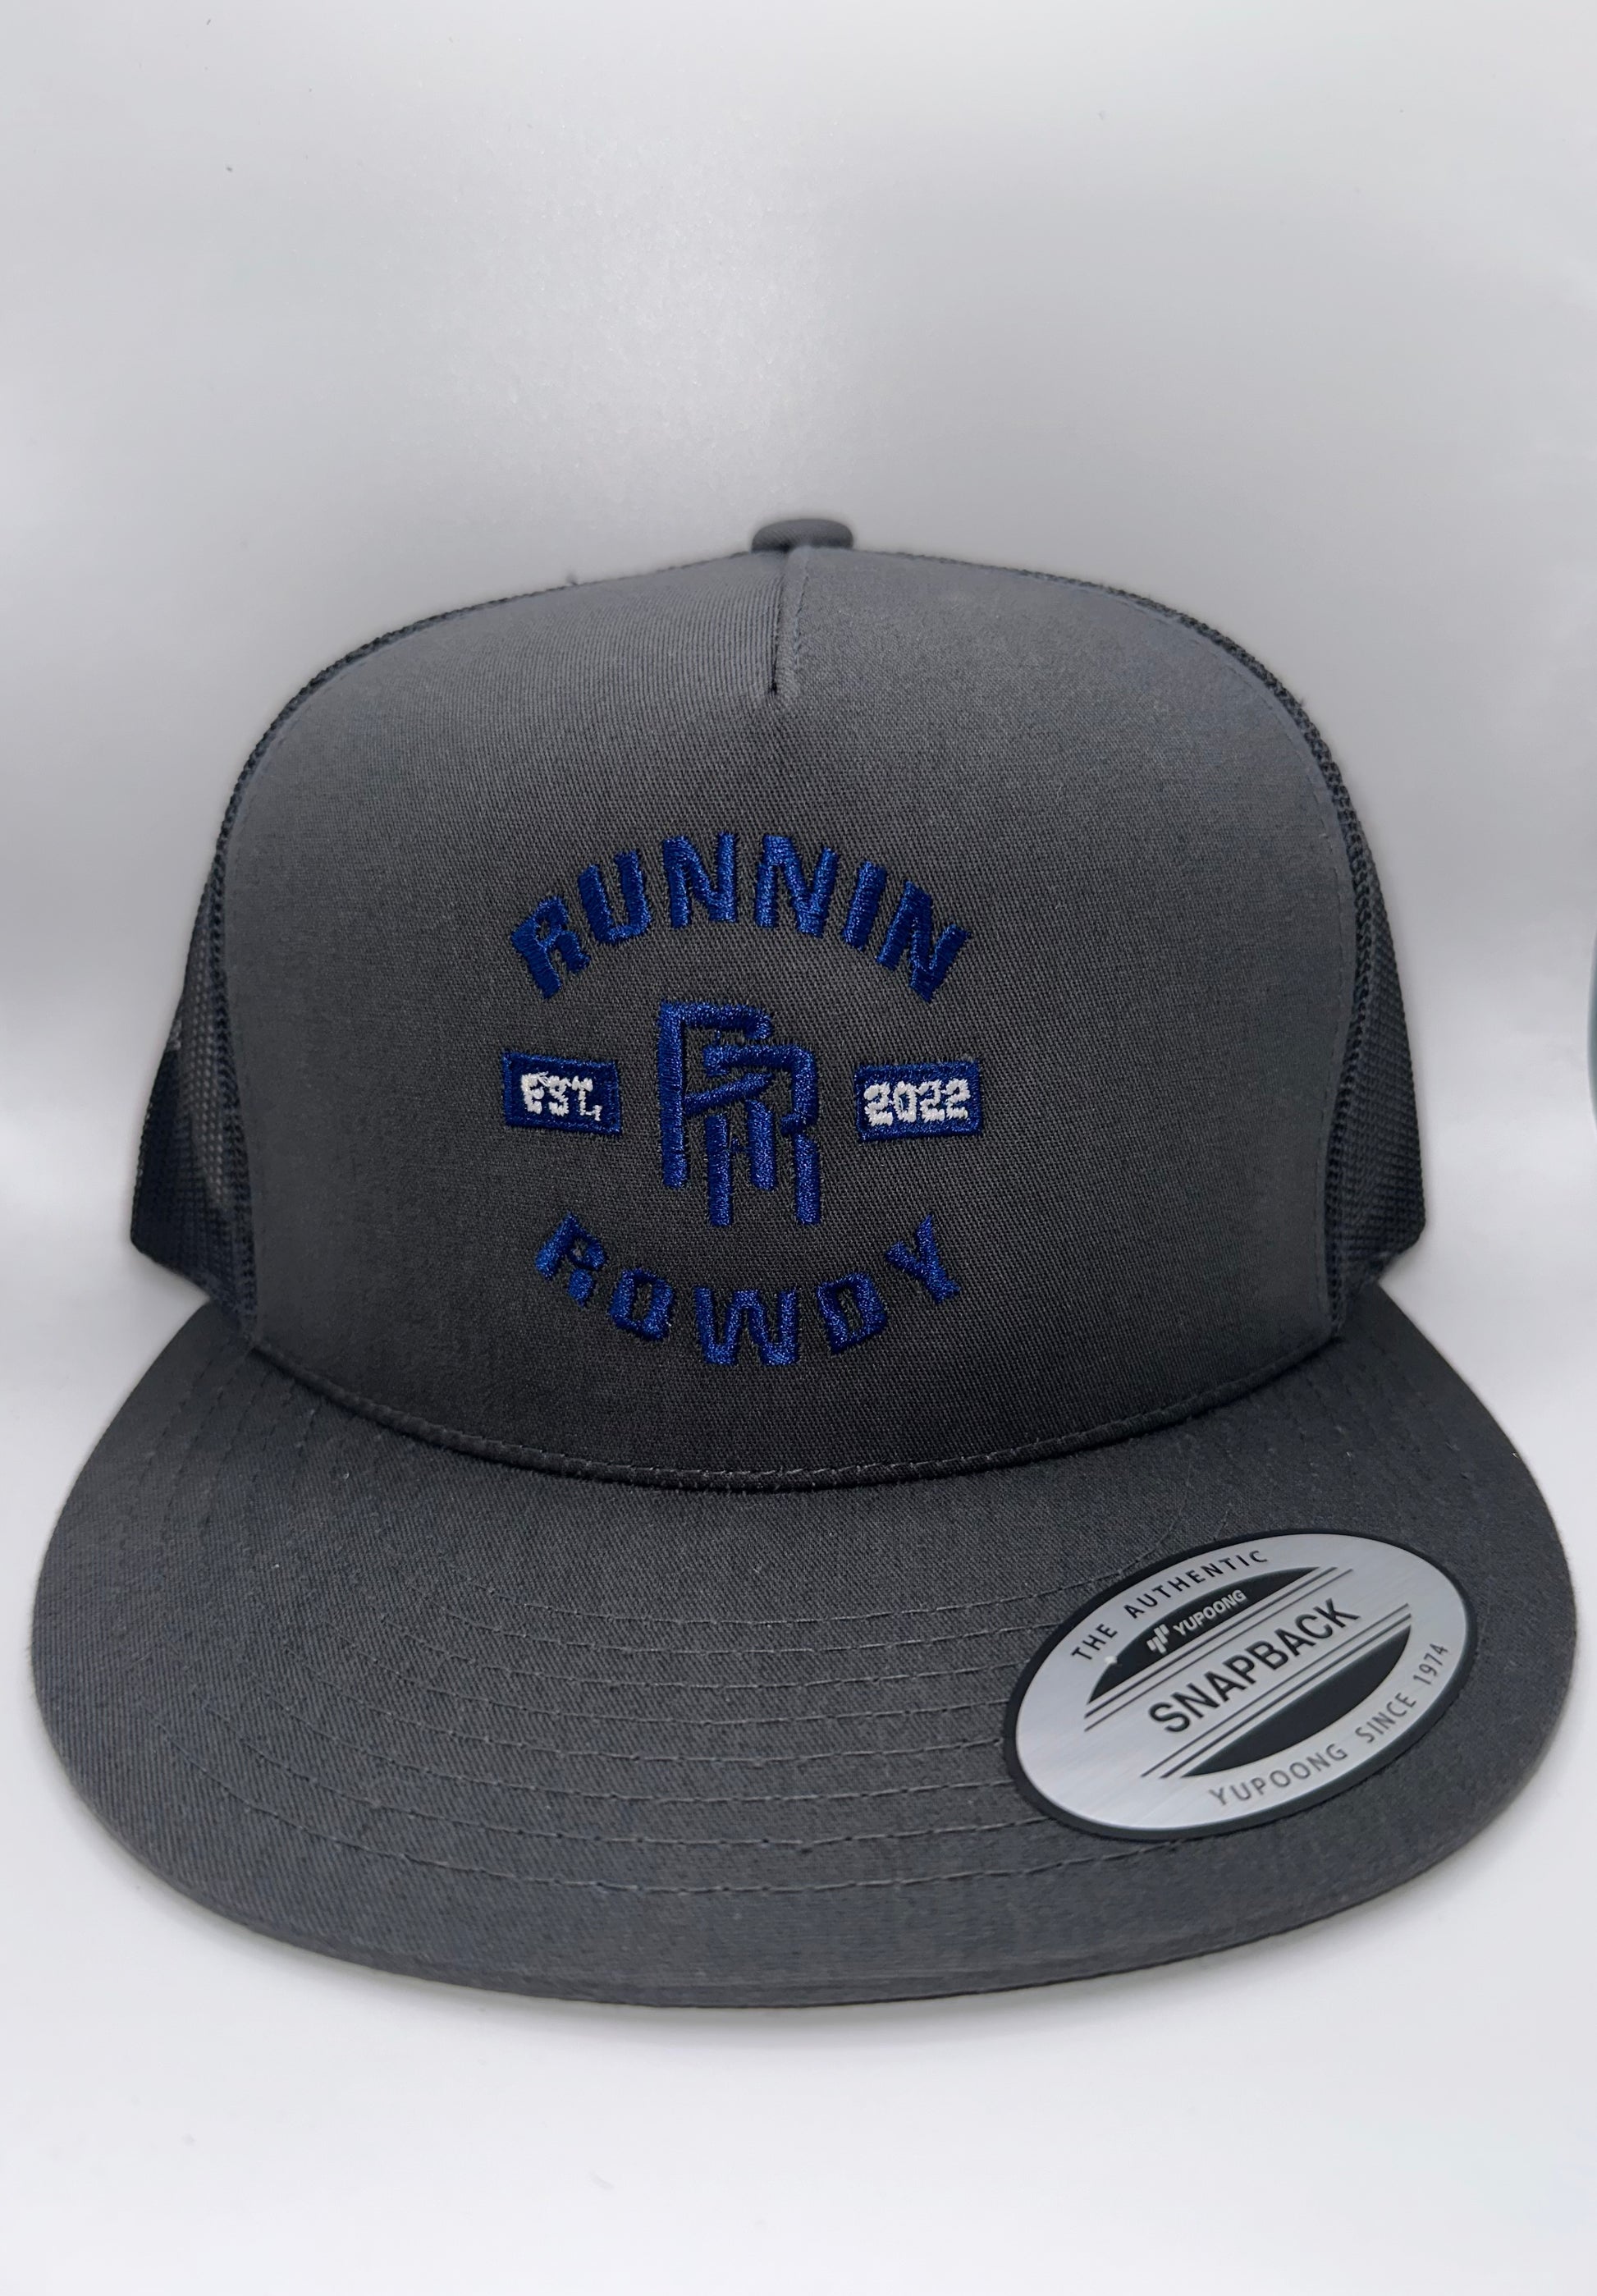 Grey Snapback hat with dark blue writing